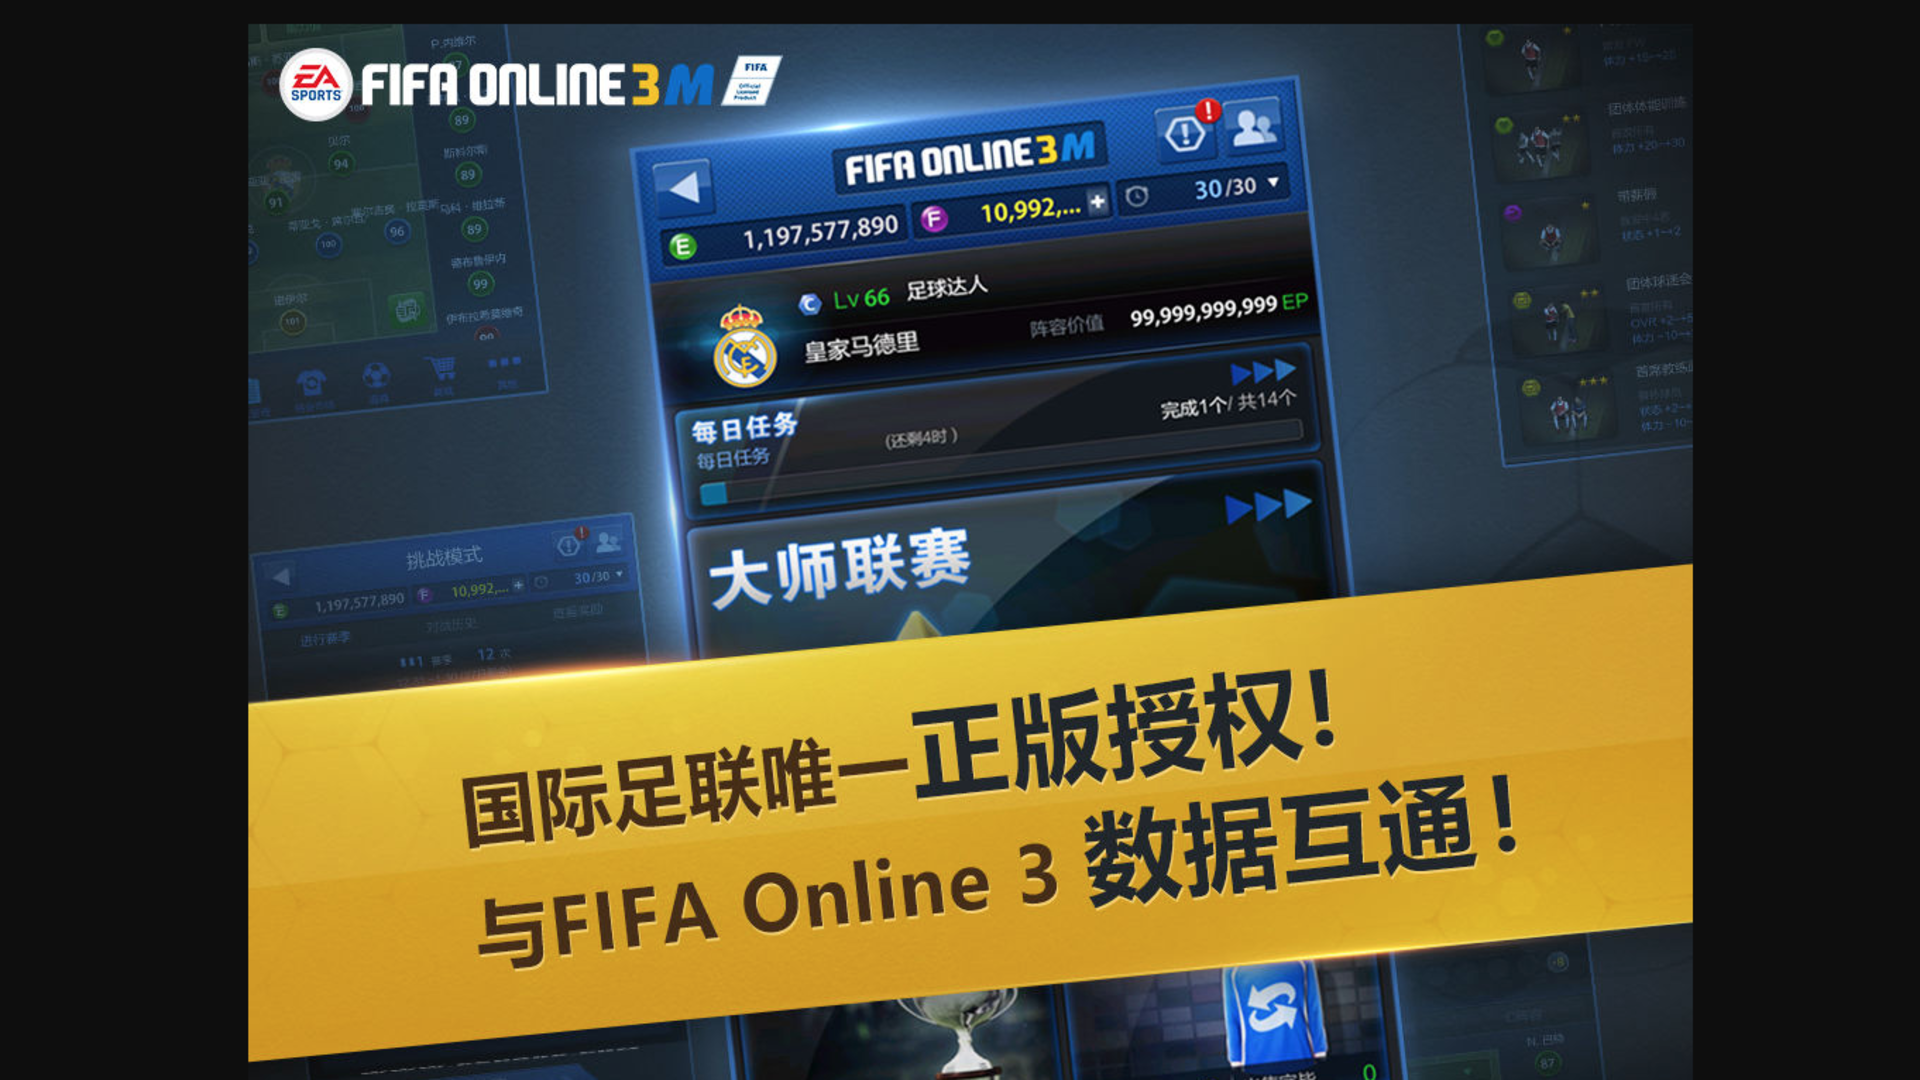 Banner of FIFA ONLINE 3 M โดย EA SPORTS™ 